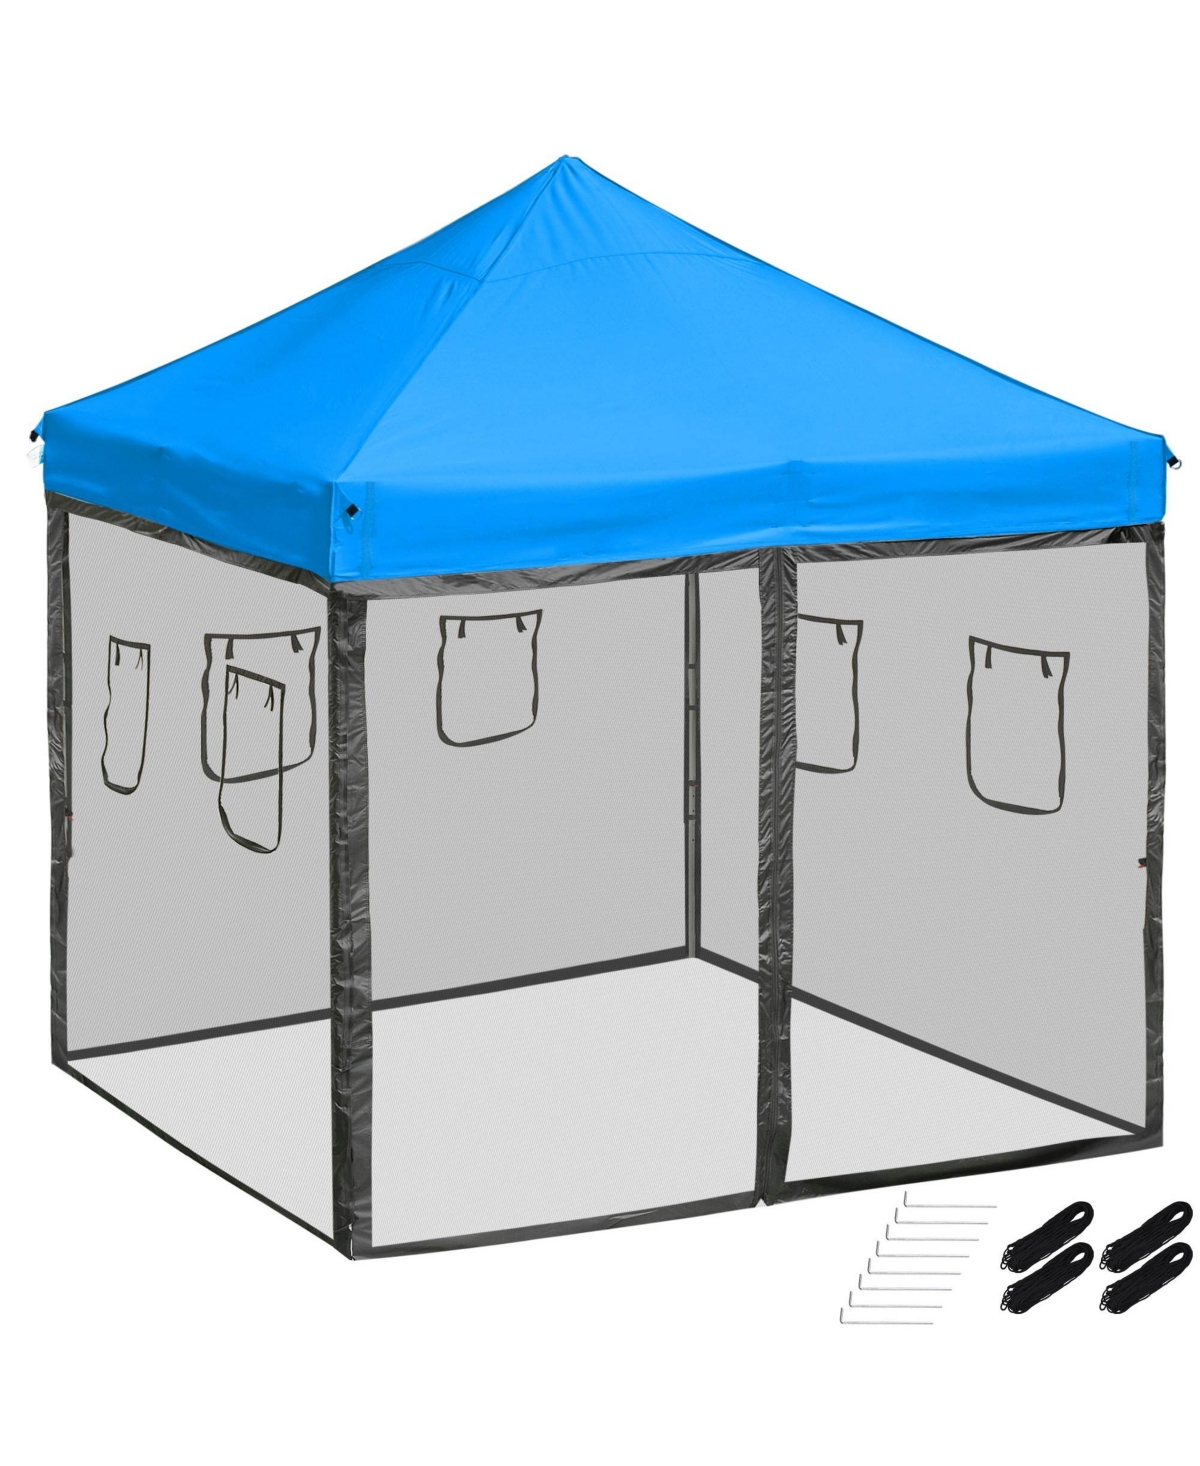 10x10 Ft Replacement Canopy Top Kit 4 Mesh Sidewalls Yard Vendor - Blue